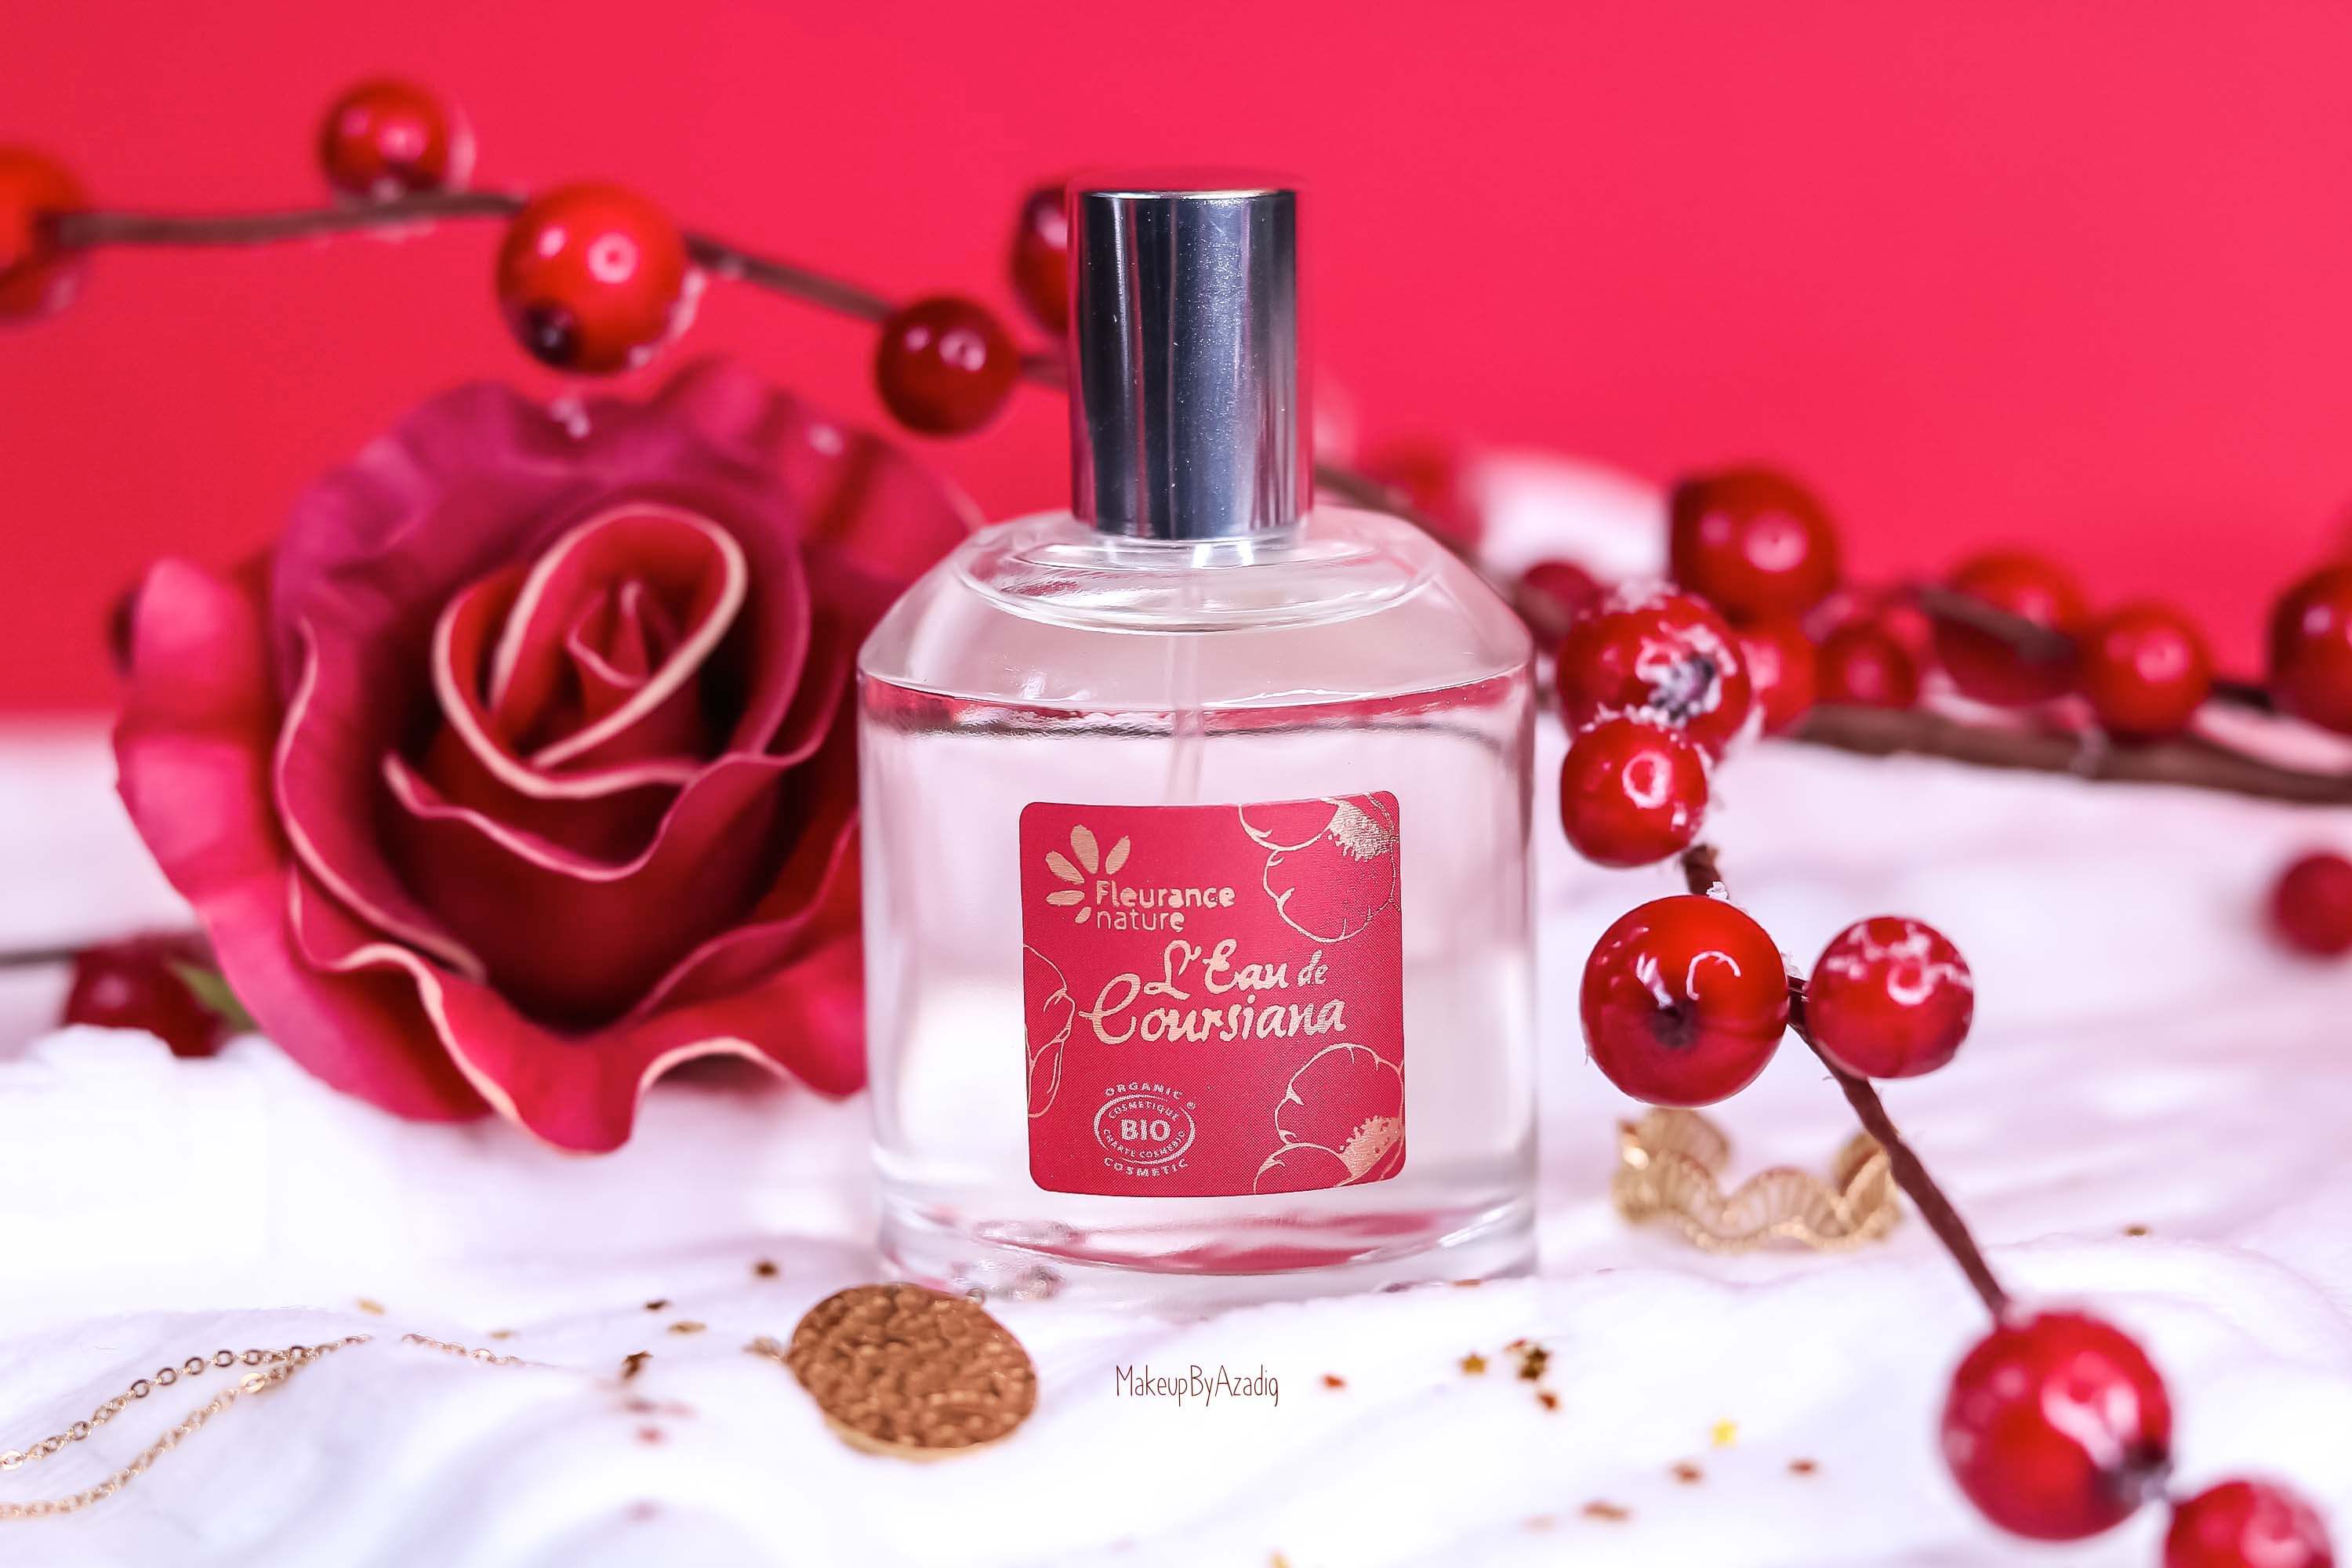 revue-parfum-bio-eau-coursiana-fleurance-nature-organic-cosmetic-makeupbyazadig-avis-prix-promo-red